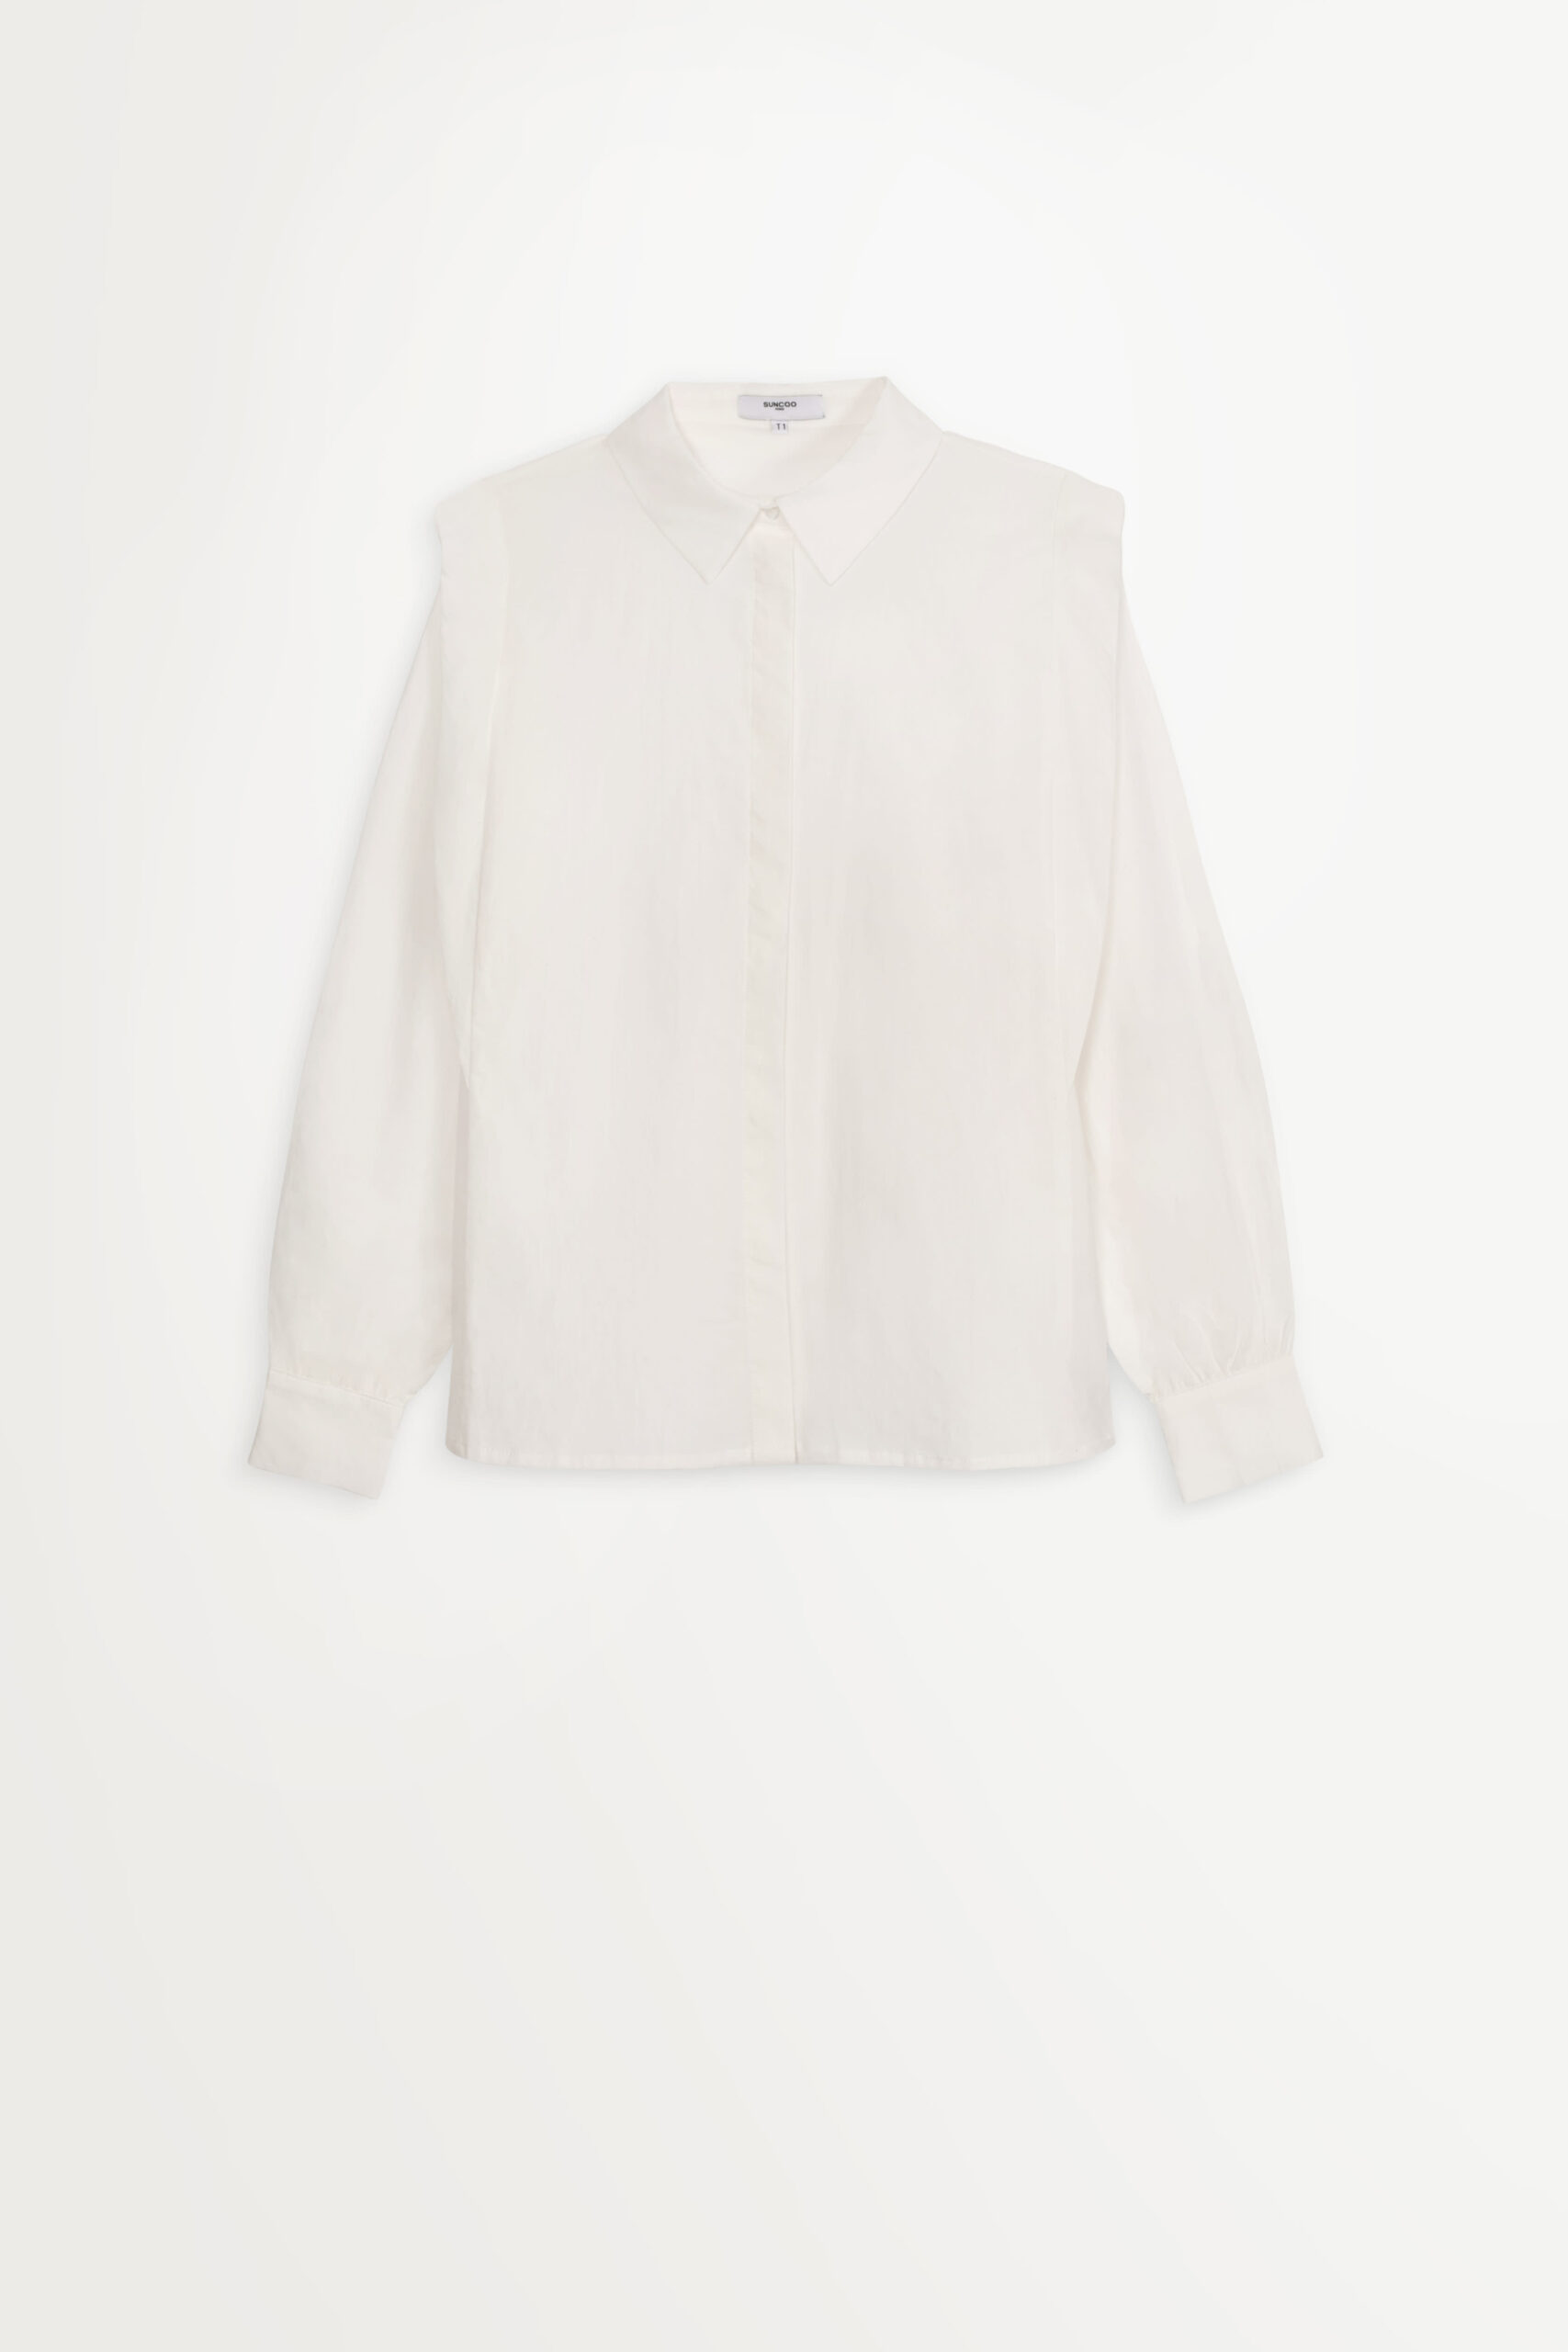 Lario White Shirt - Divine